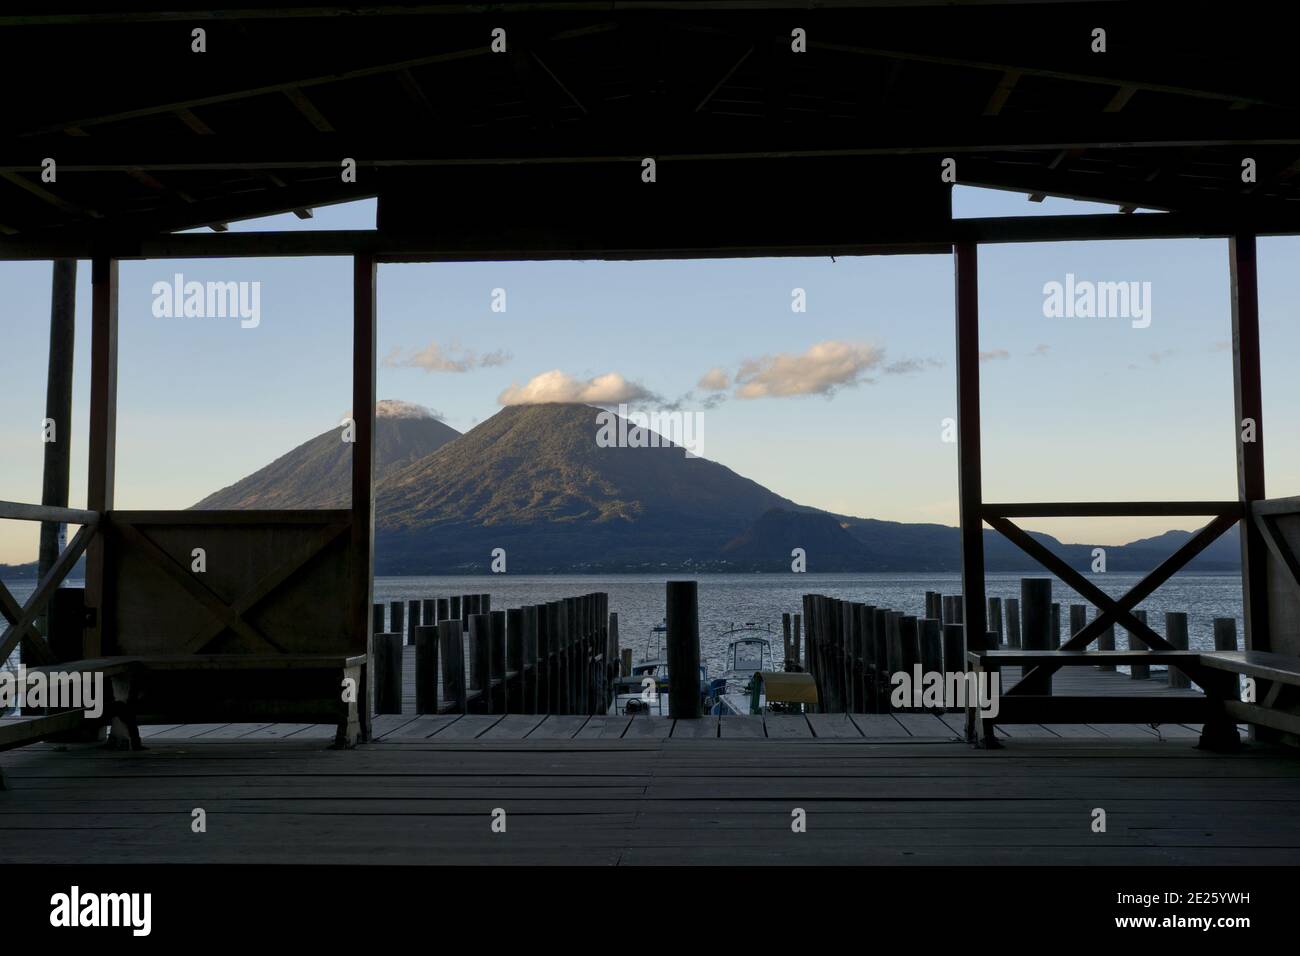 Guatemala, Central America: Lake Atitlán (Atitlan) with volcanos Atitlan and Toliman, sunrise with landing scape Stock Photo